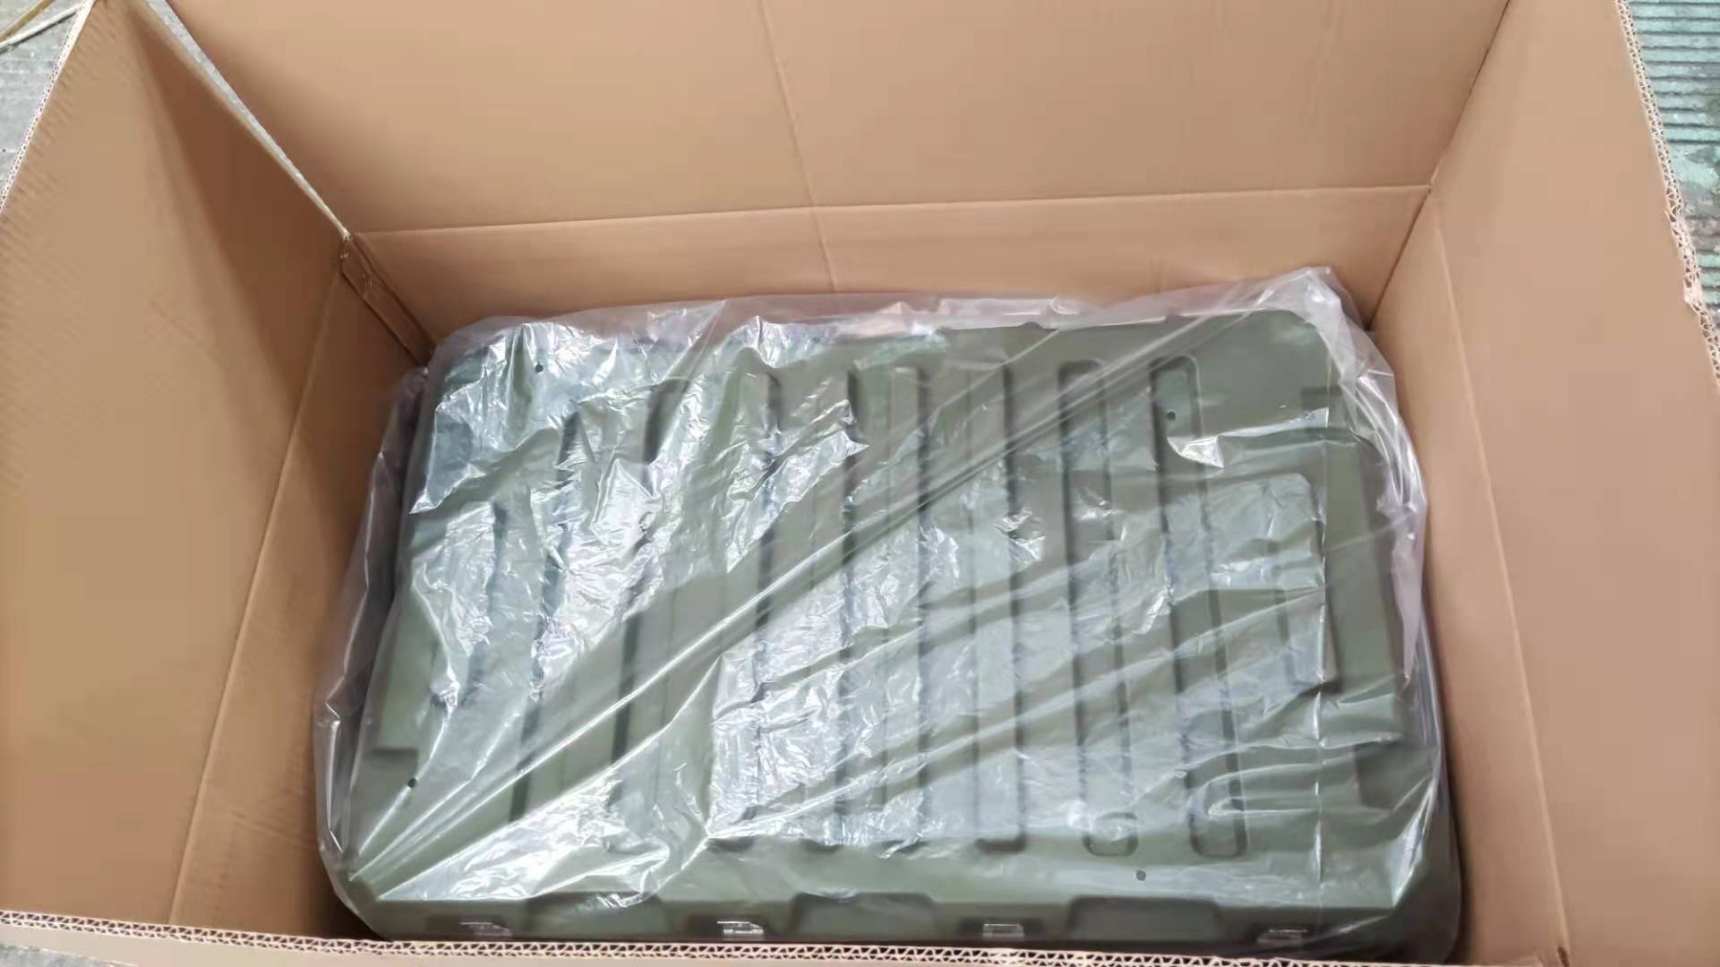 Hard plastic instrument military transport box rotomolded tool case large